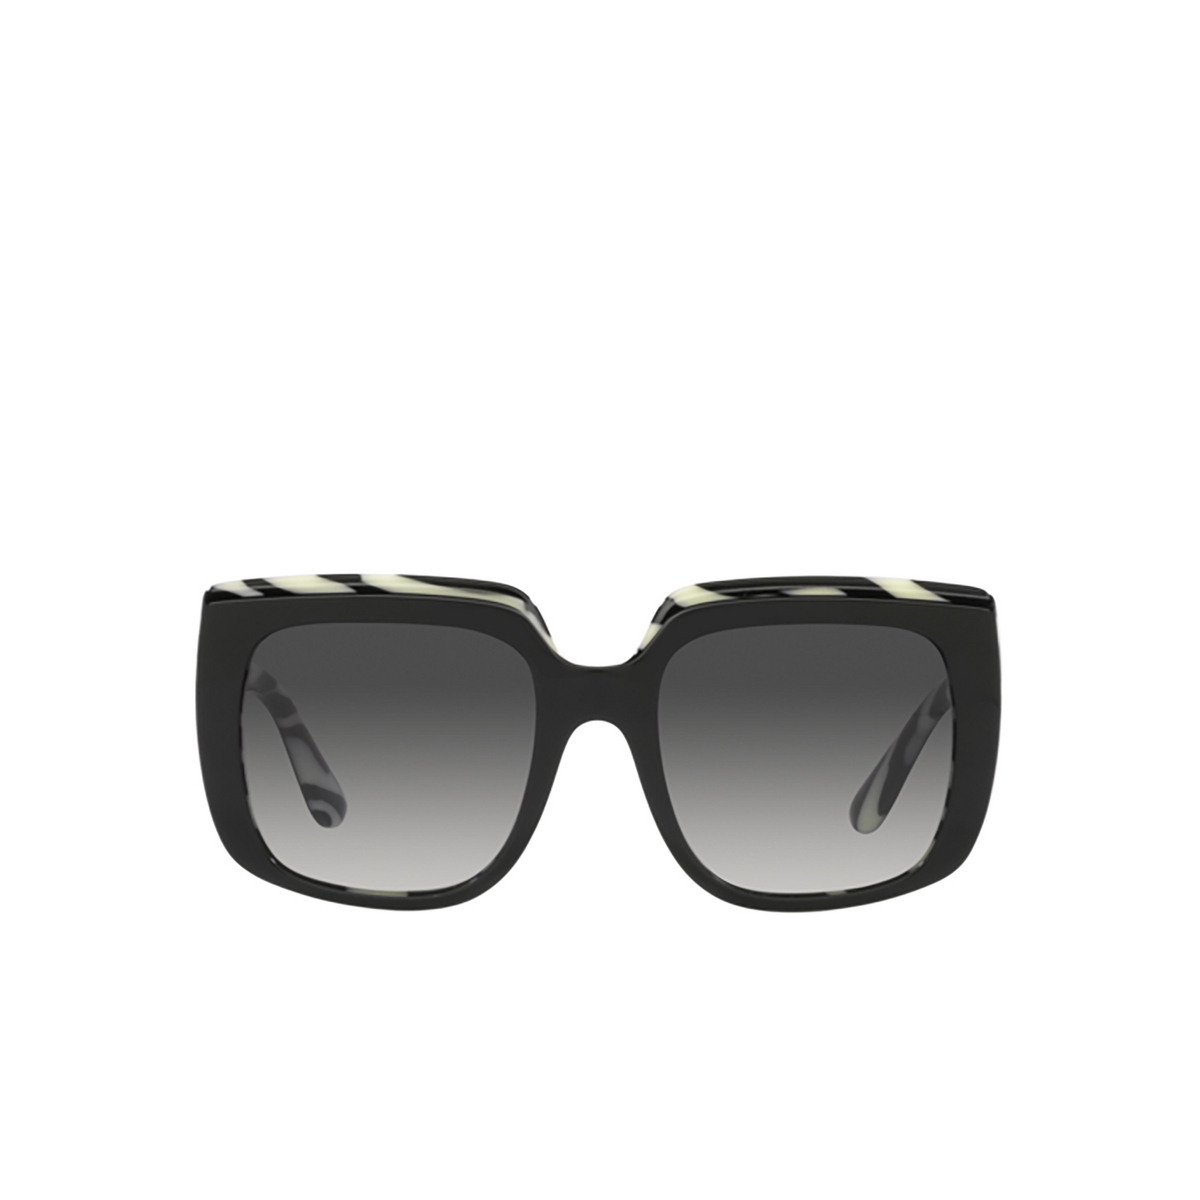 Dolce & Gabbana DG4414 Sunglasses 33728G Top Black On Zebra - front view